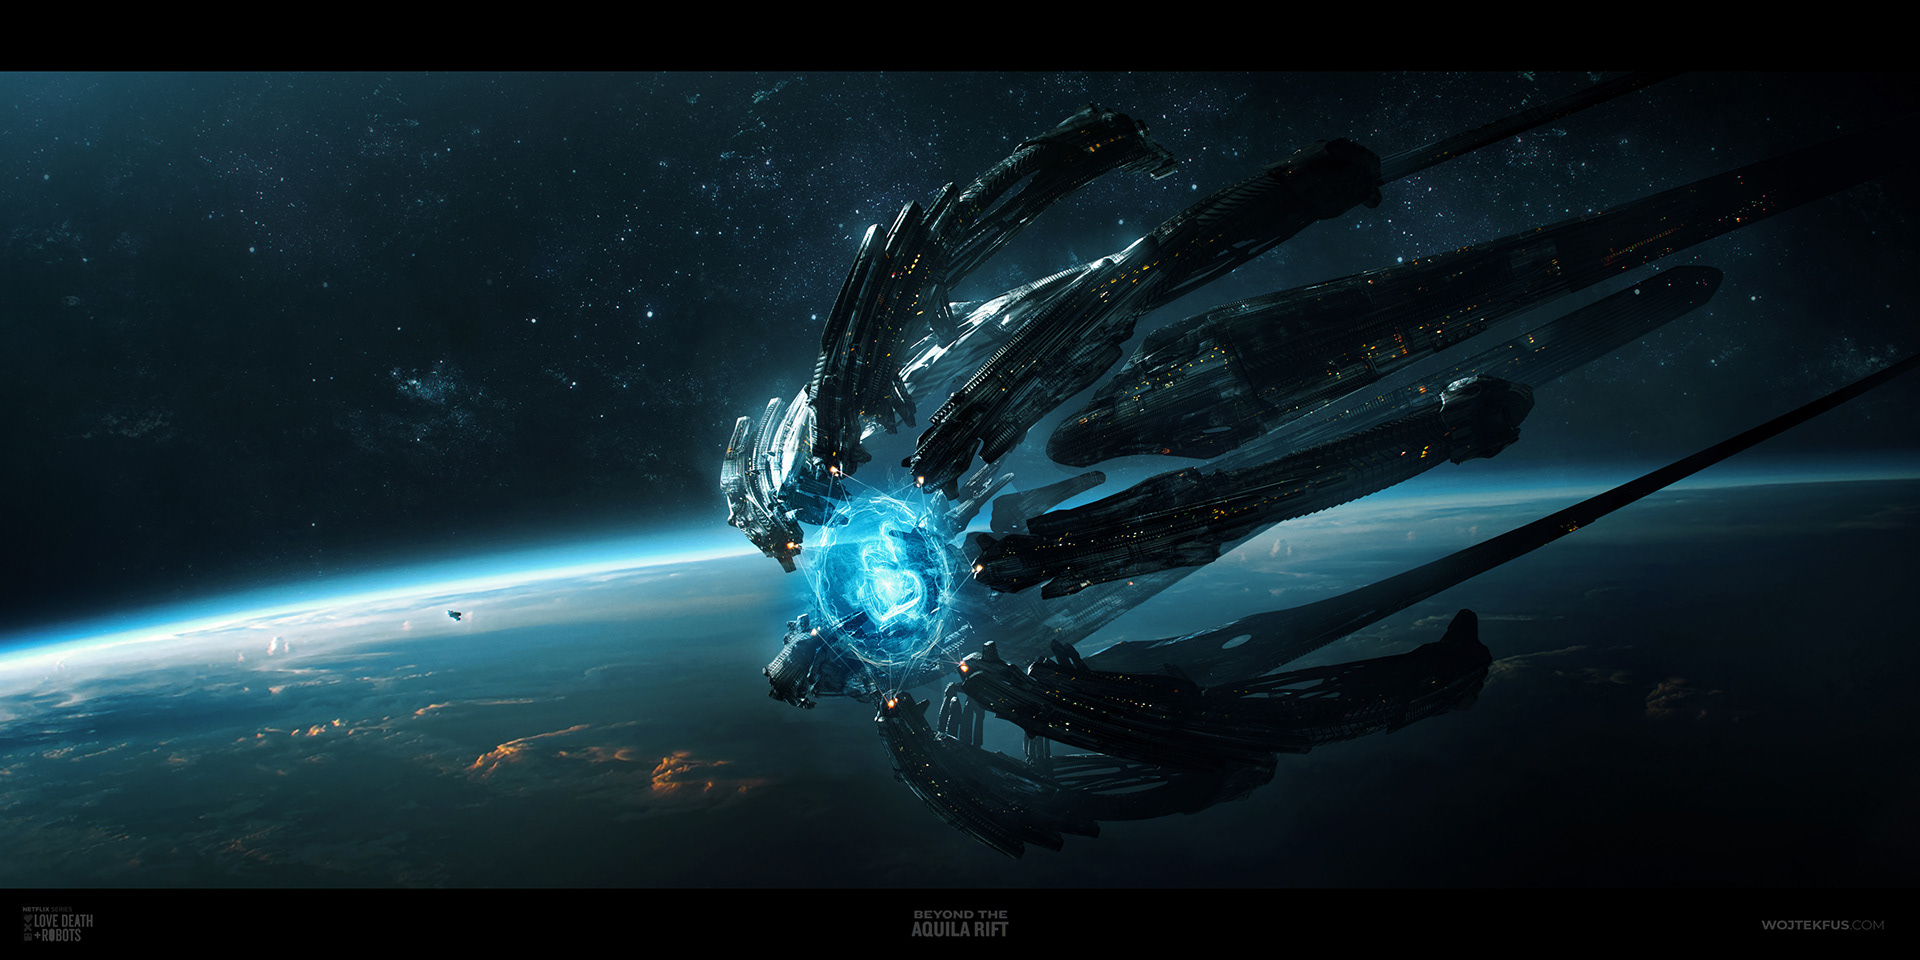 Wojtek Fus Science Fiction Love Death Robots Spaceship Stars Universe Planet Glowing Dark Orbits Blu 1920x960